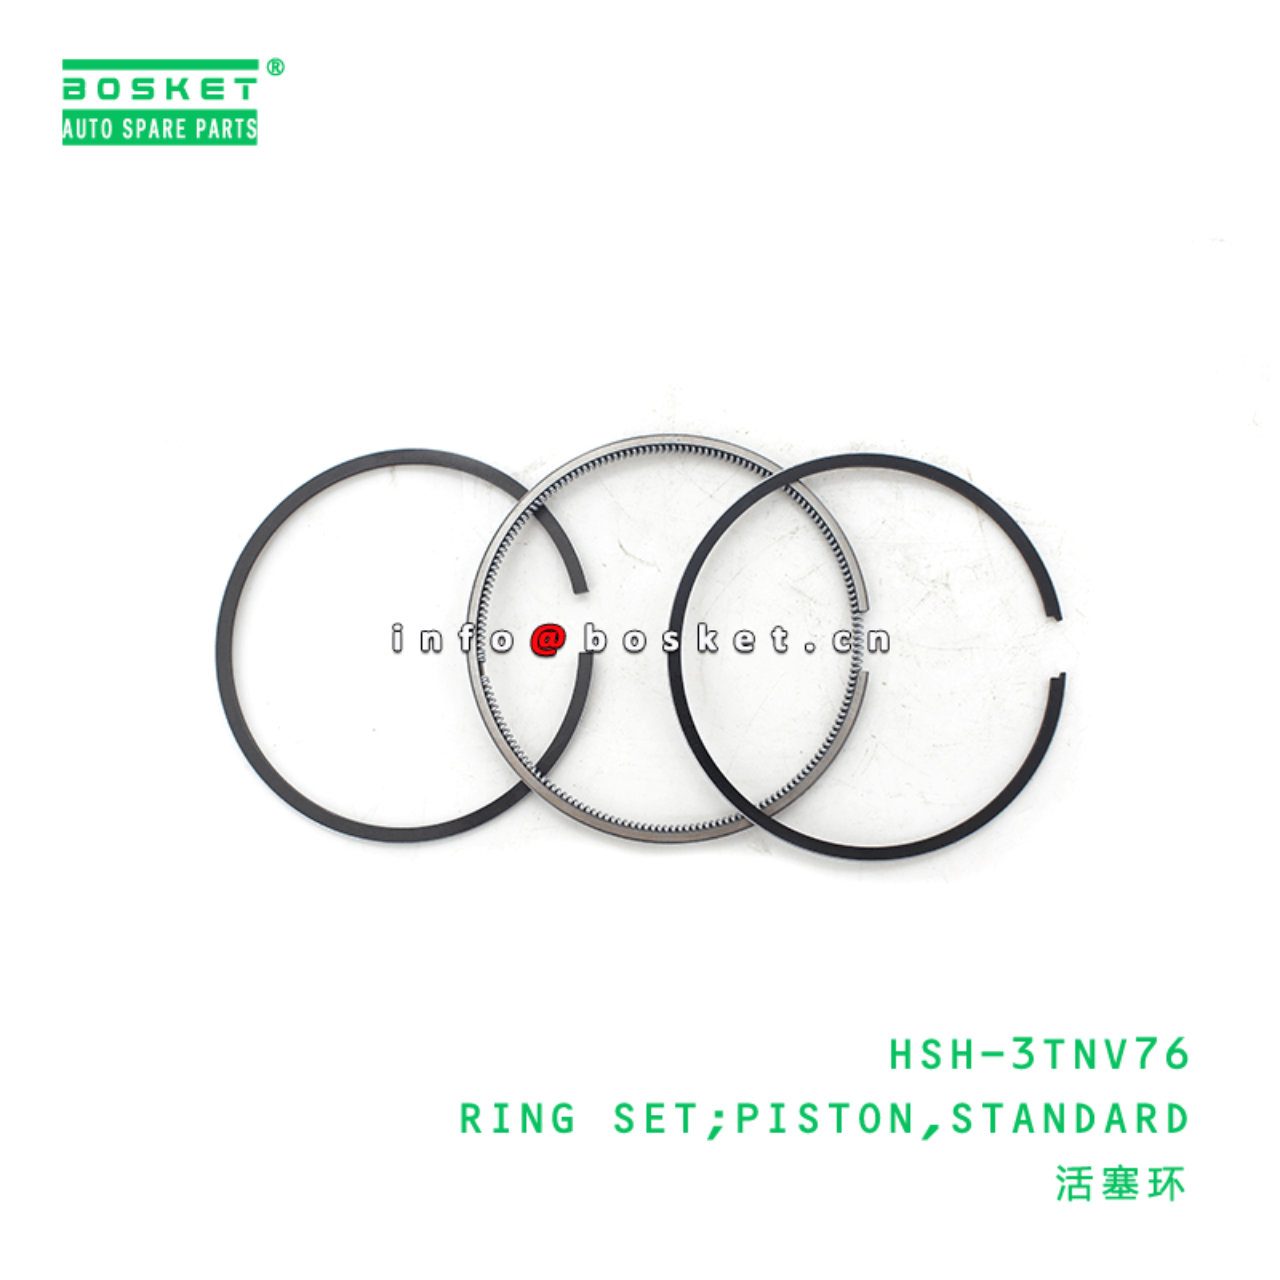  HSH-3TNV76 Standard Piston Ring Set Suitable For ISUZU 3TNV76 